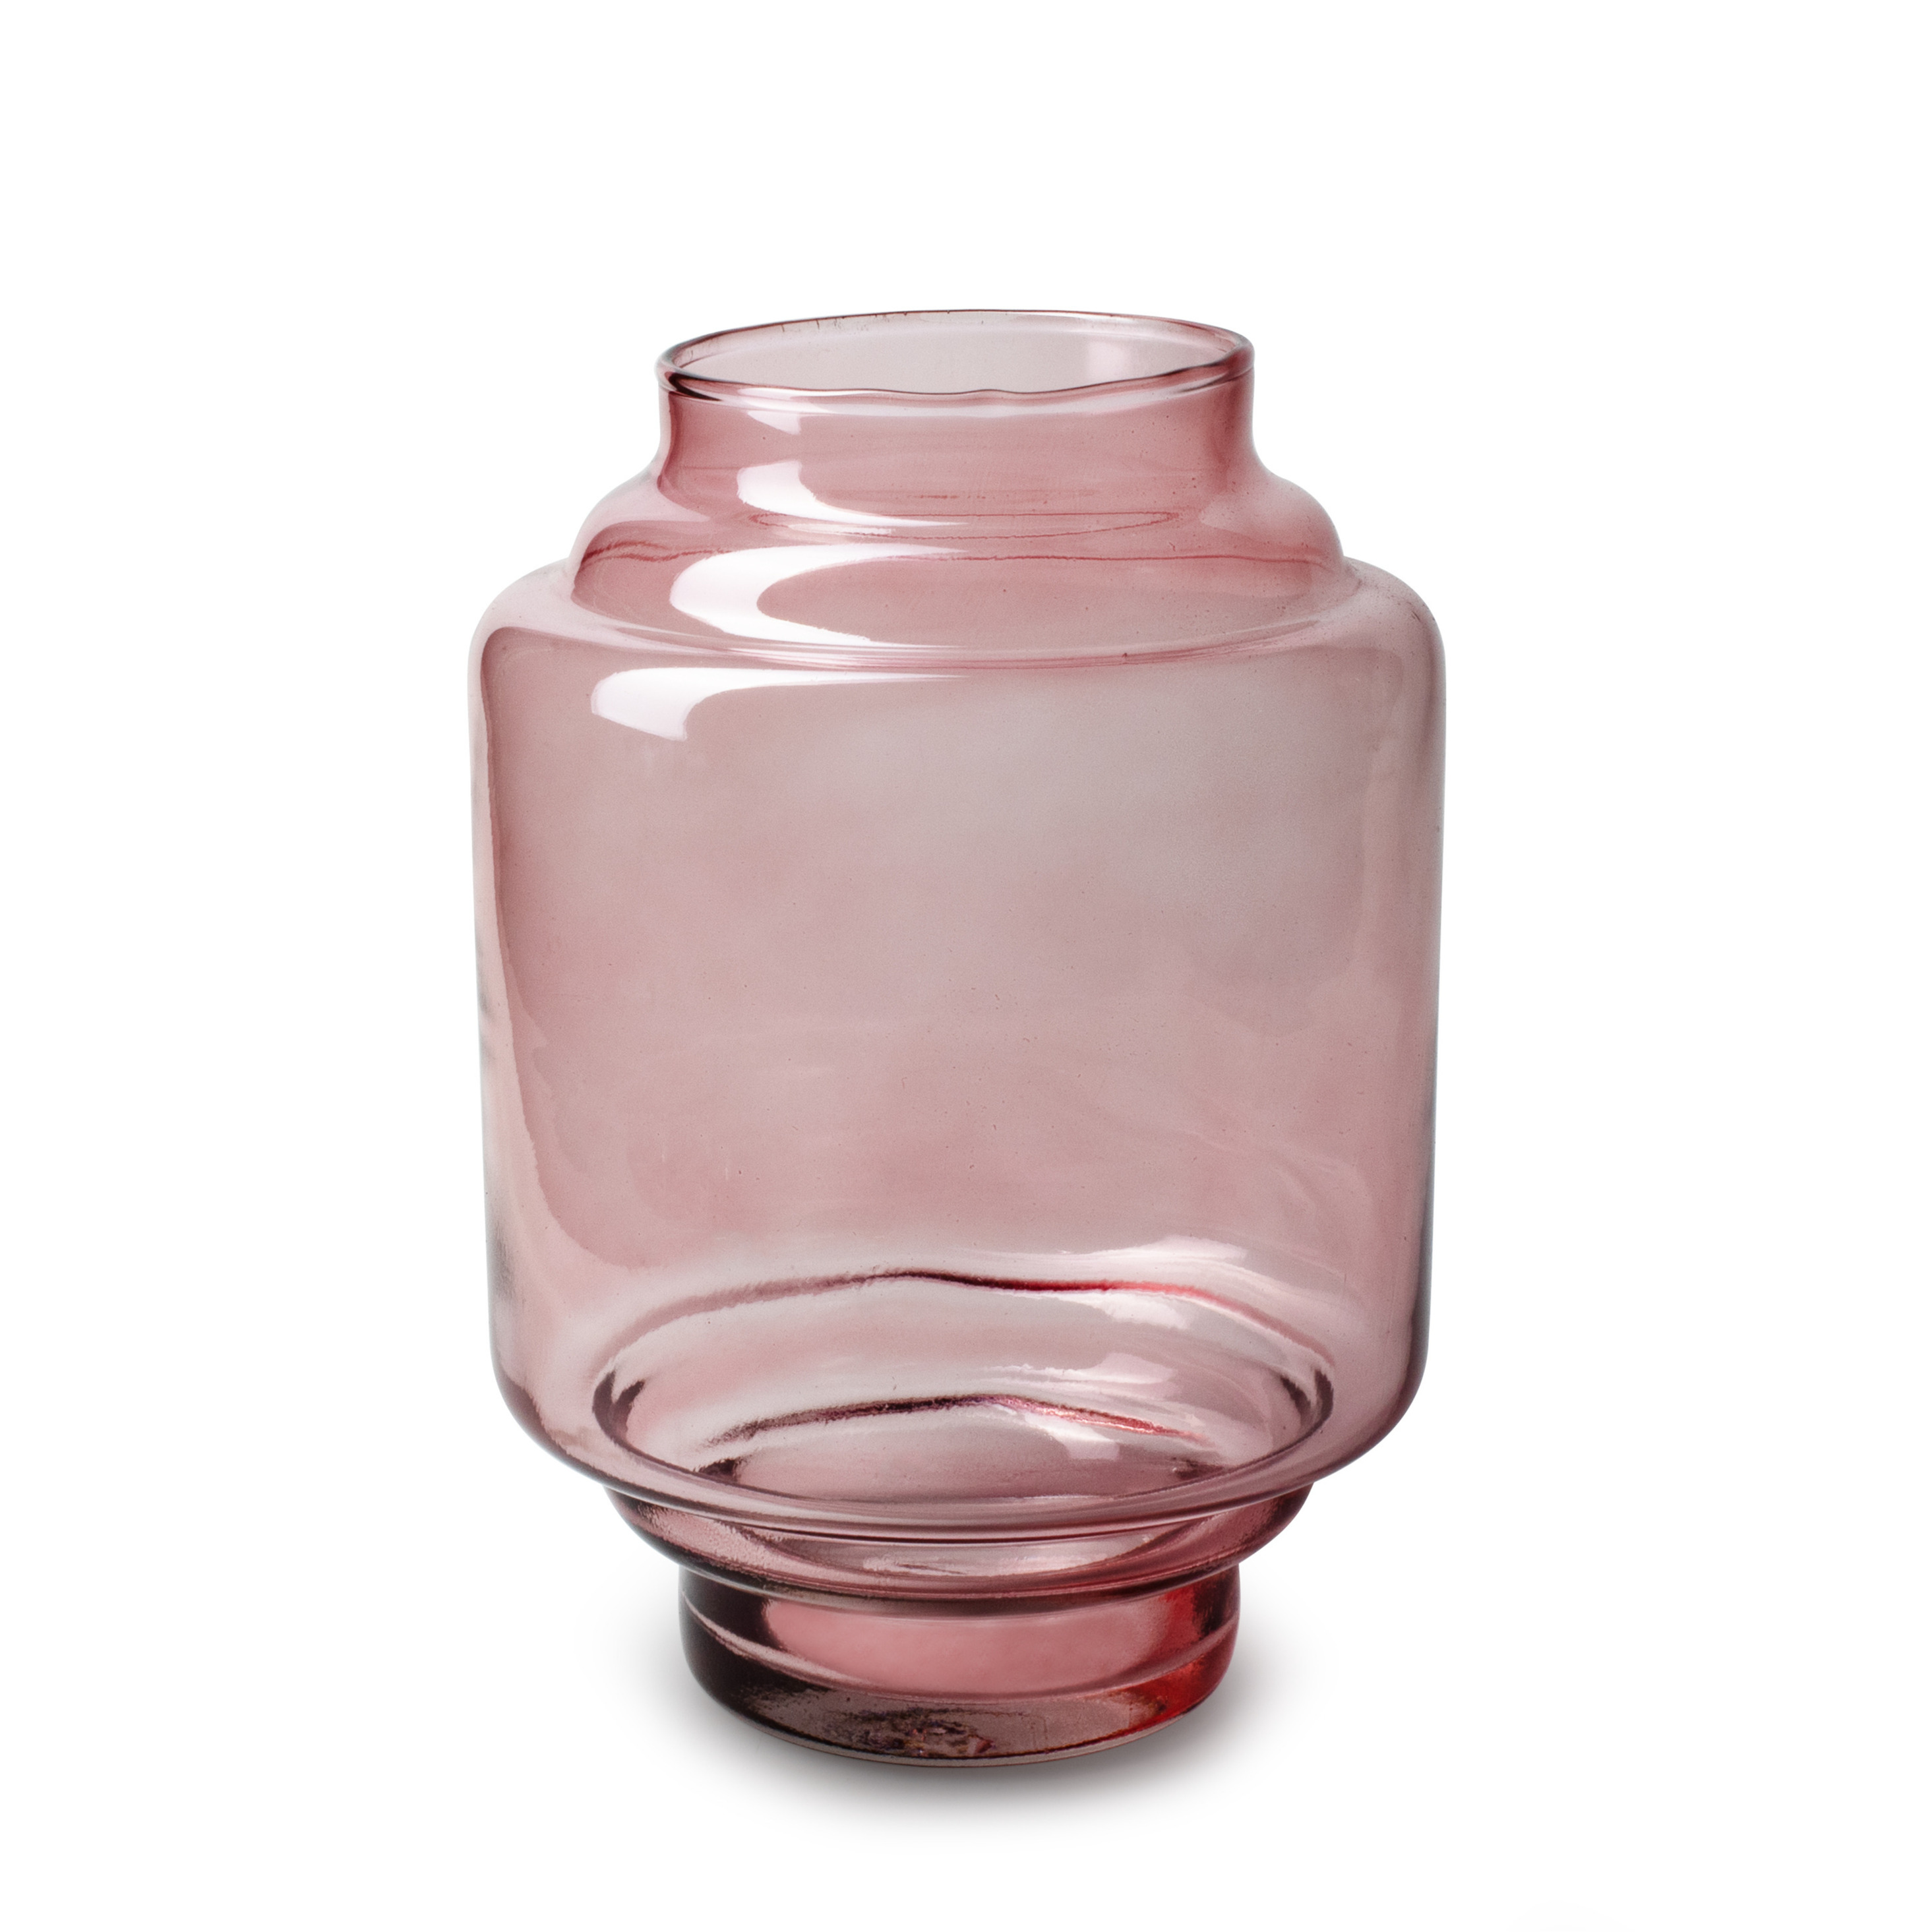 Bloemenvaas Lotus transparant roze glas D17 x H25 cm trap vaas